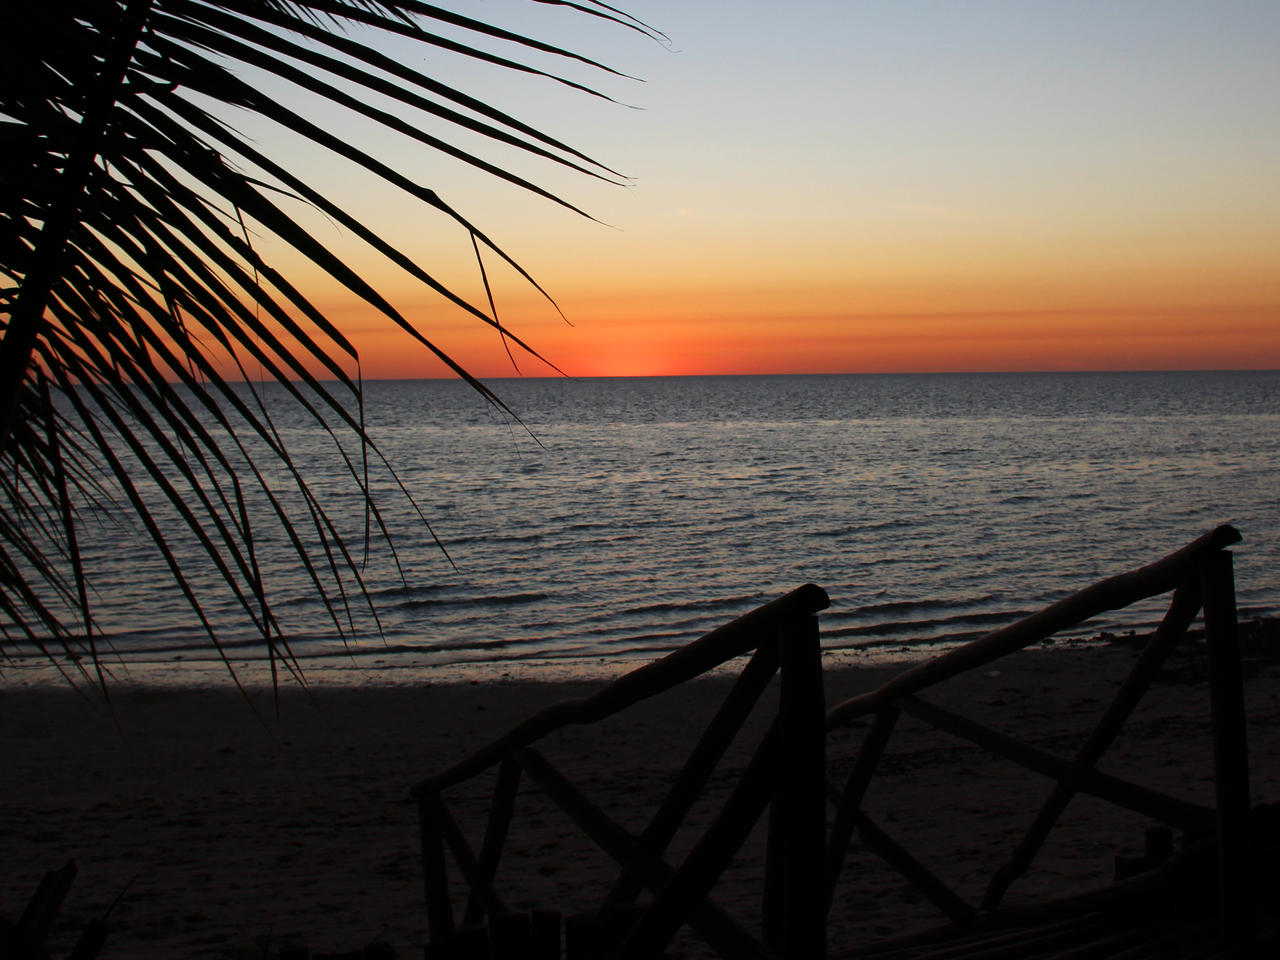 Mozambique strand